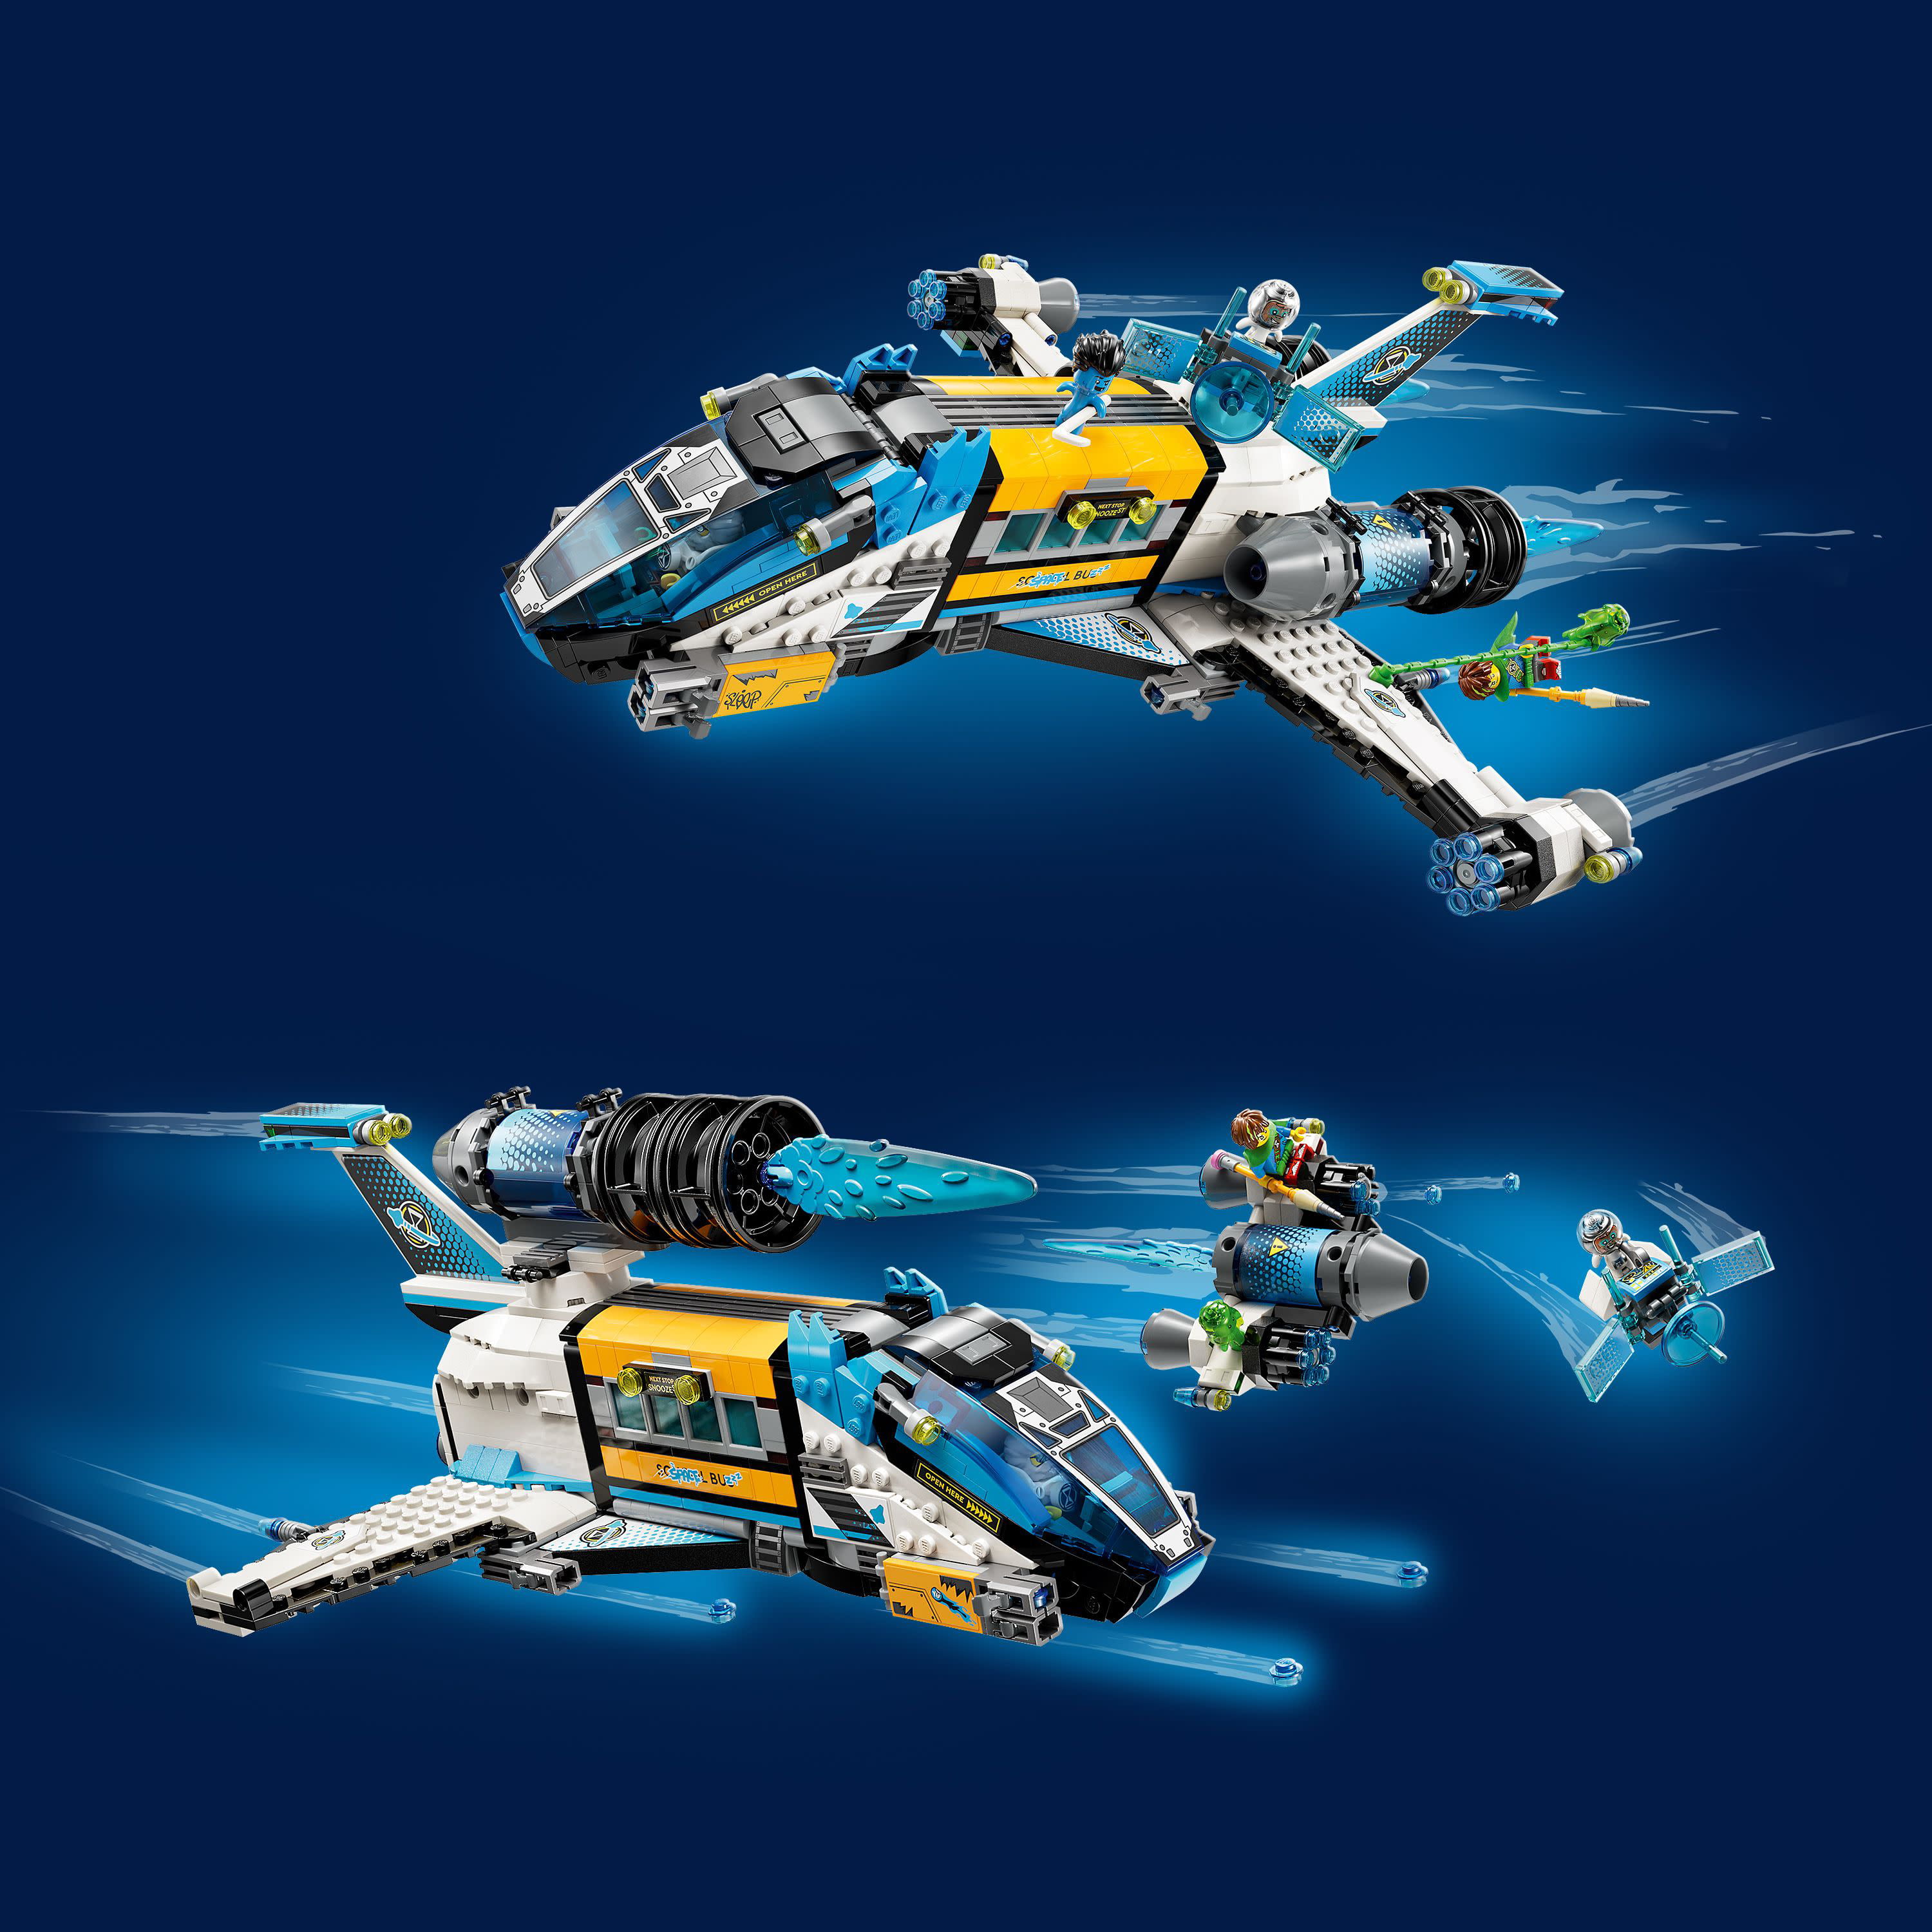 LEGO® DREAMZzz™ Mr. Oz's Spacebus – AG LEGO® Certified Stores